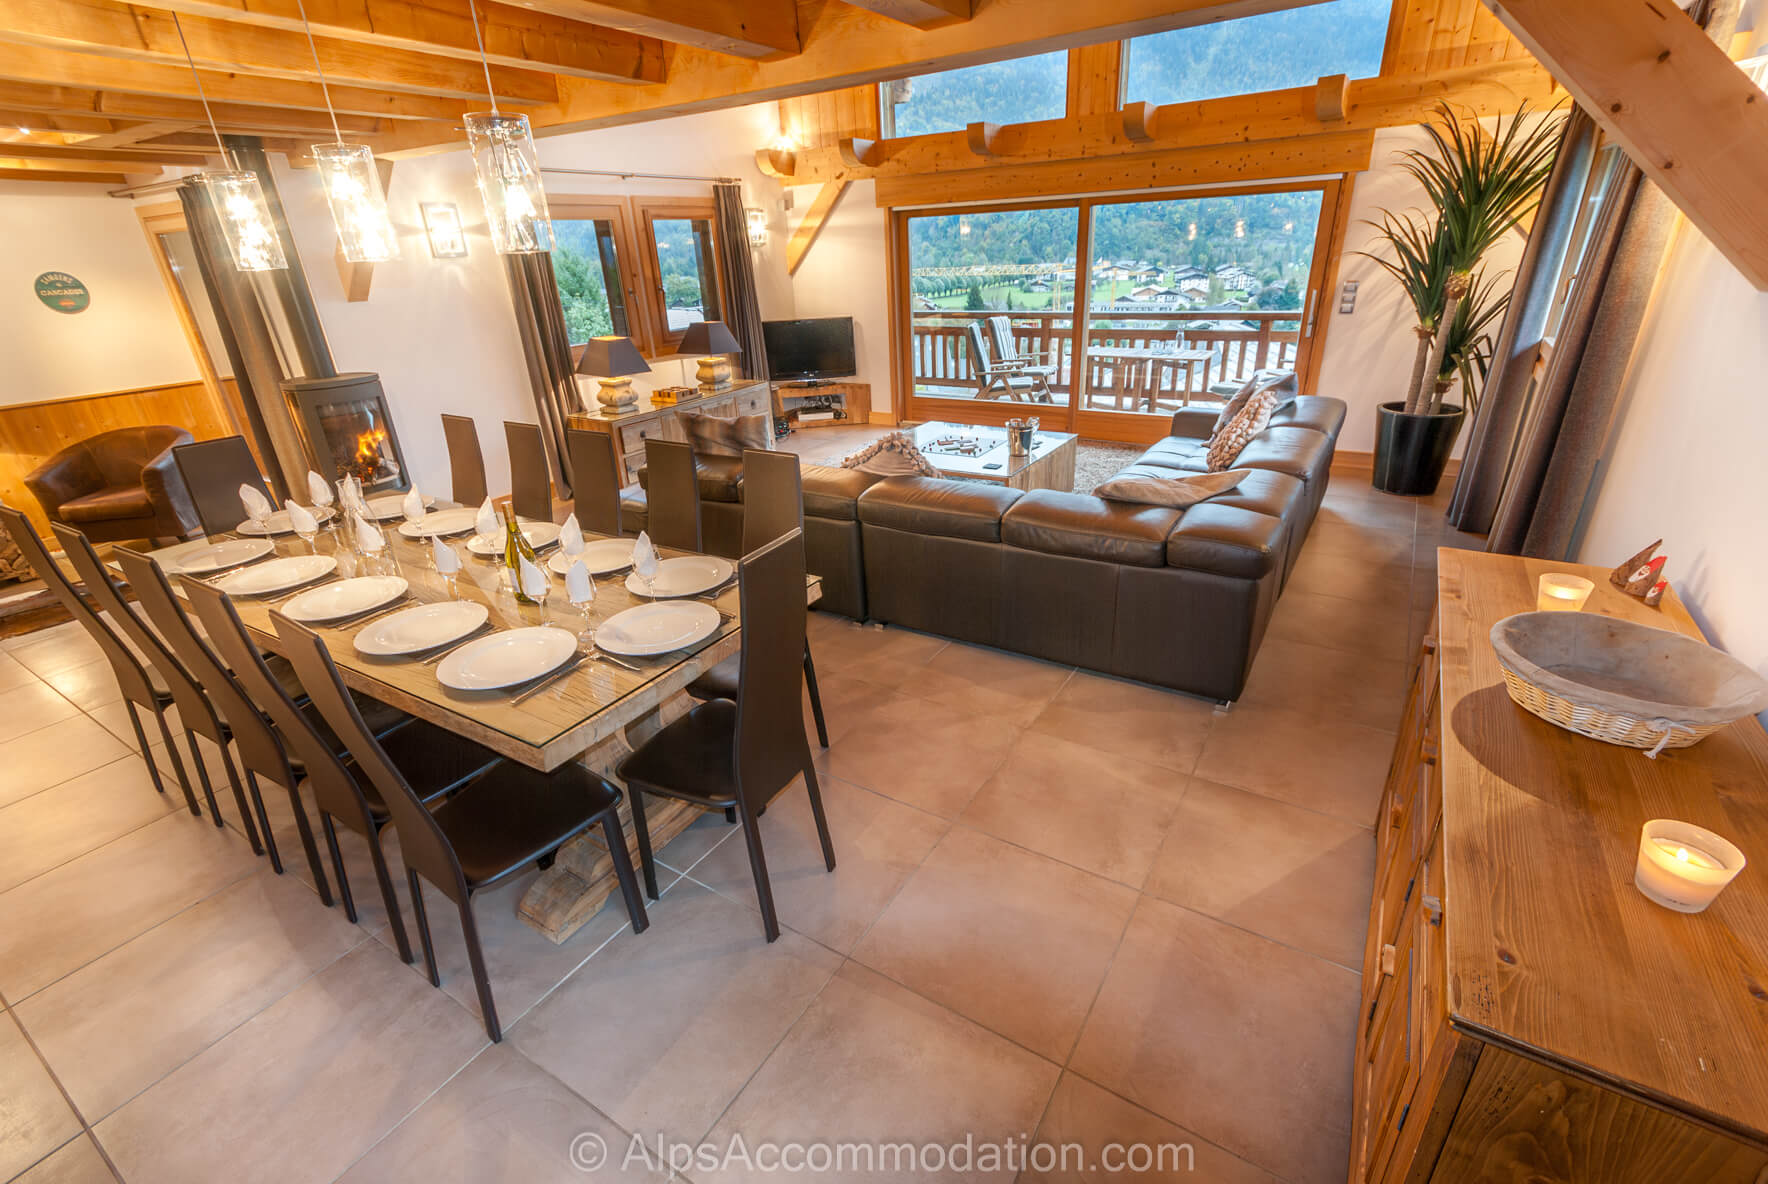 Chalet Foehn Samoëns - Beautiful dining table seats 14 comfortably